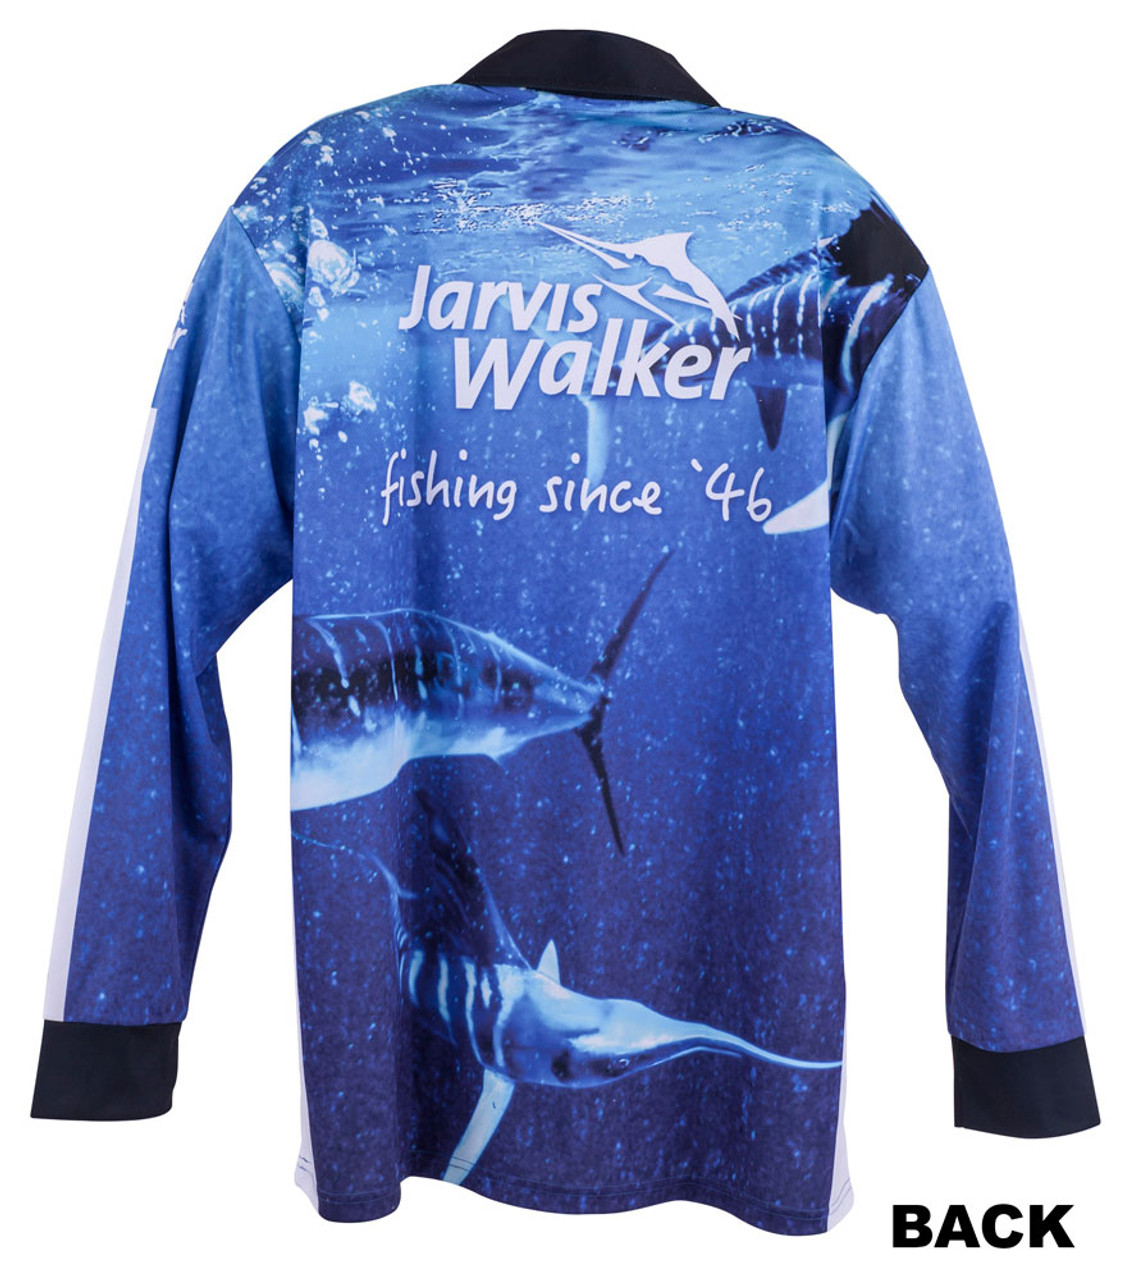 Jarvis Walker Fishing Apparel For Sale - Marlin Shirt